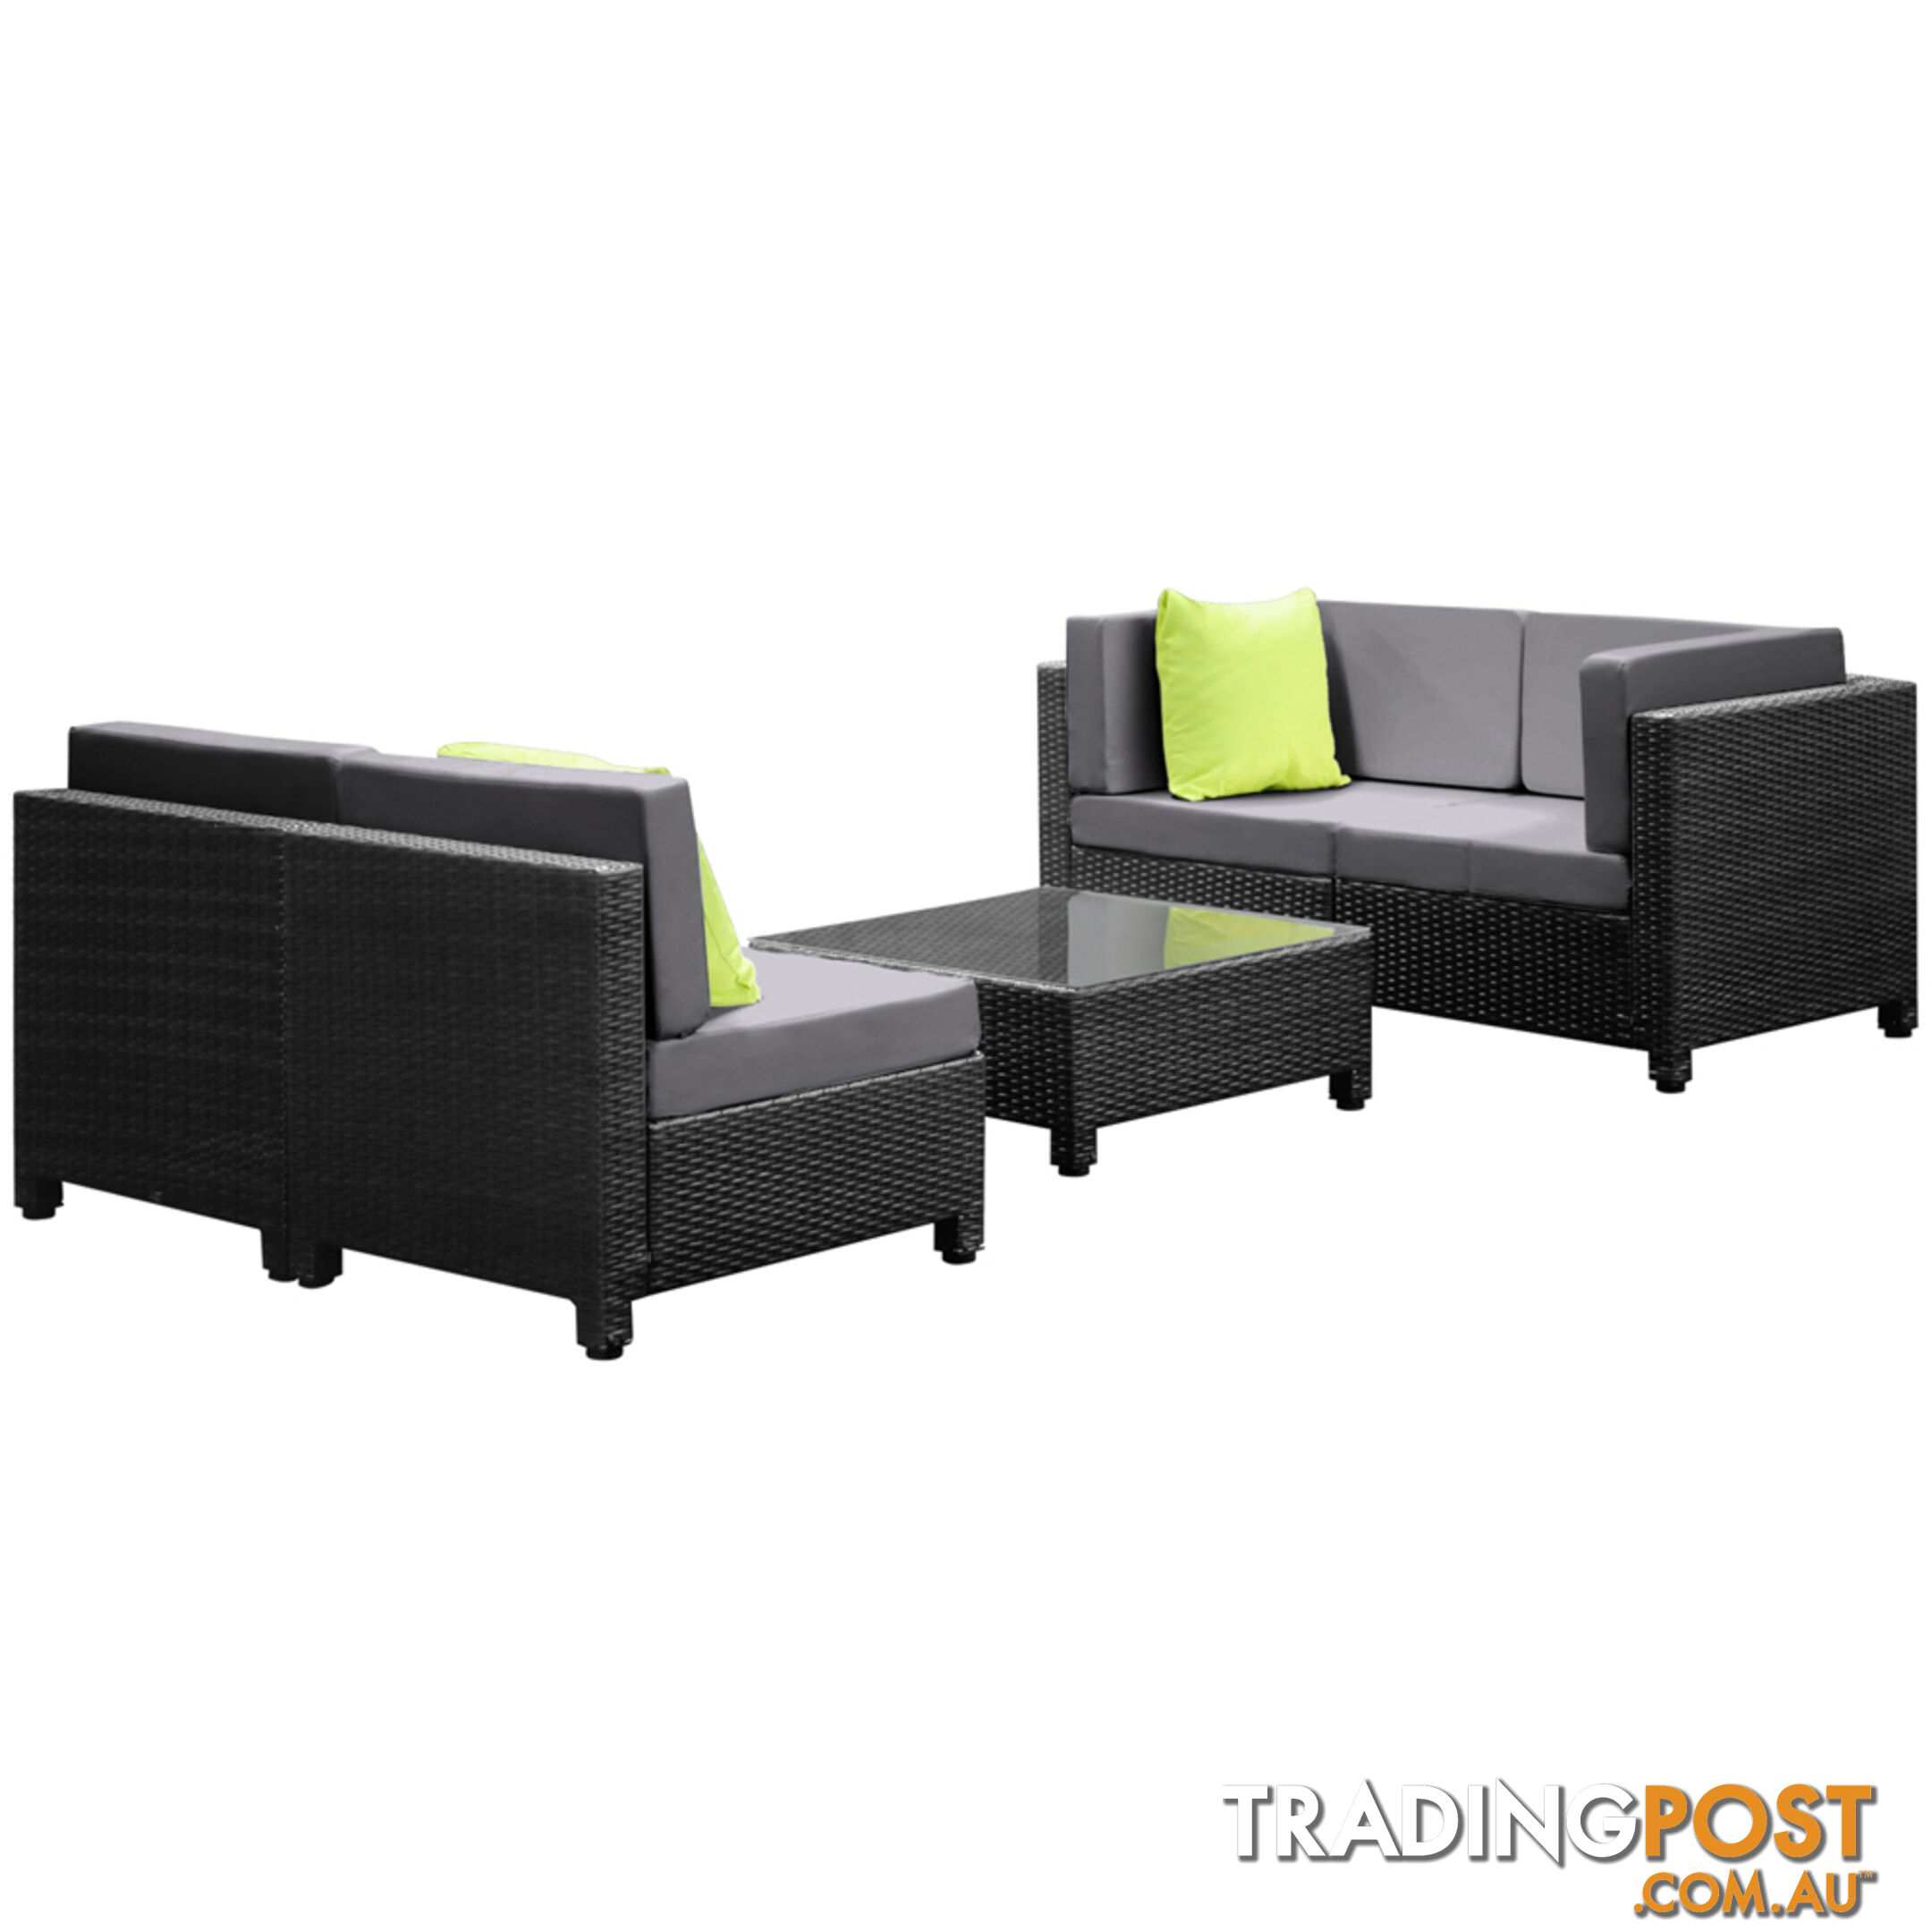 Outdoor Lounge 4 Seater Garden Furniture Wicker 5pcs Rattan Sofa Setting BKGR